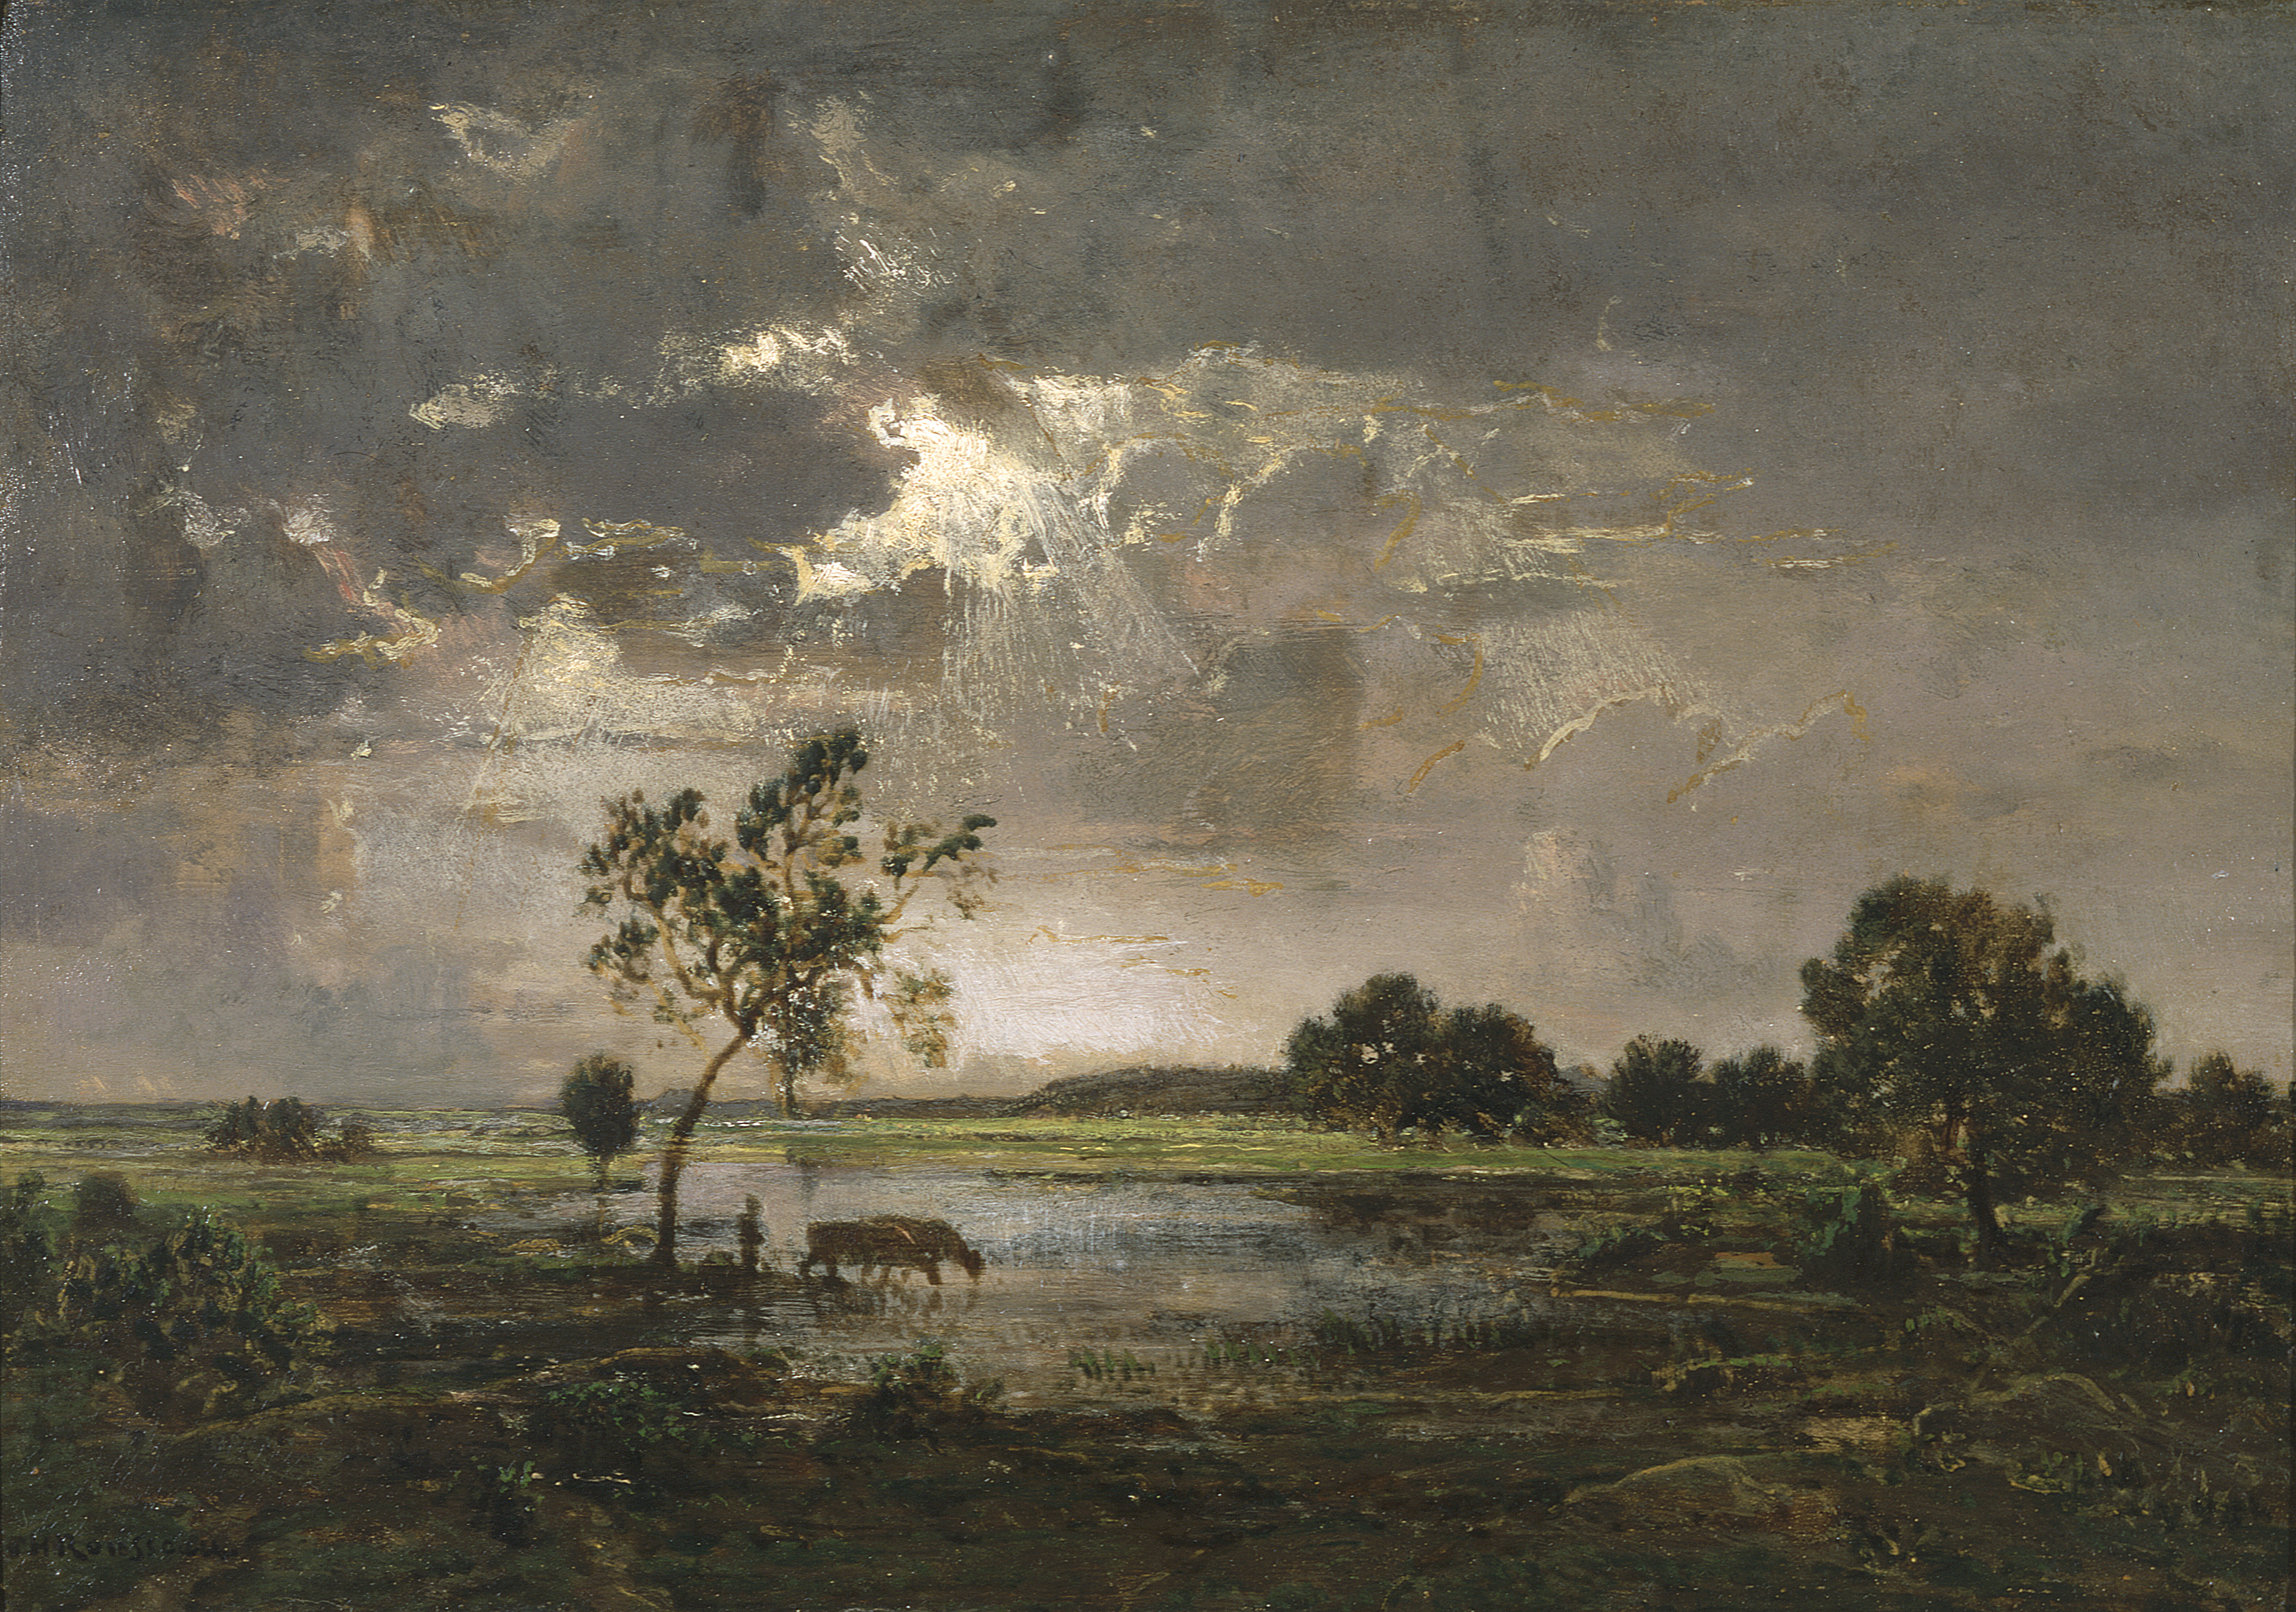 File:théodore Rousseau - Landscape - 551-1957 - Saint Louis Art Museum.jpg - Wikimedia Commons